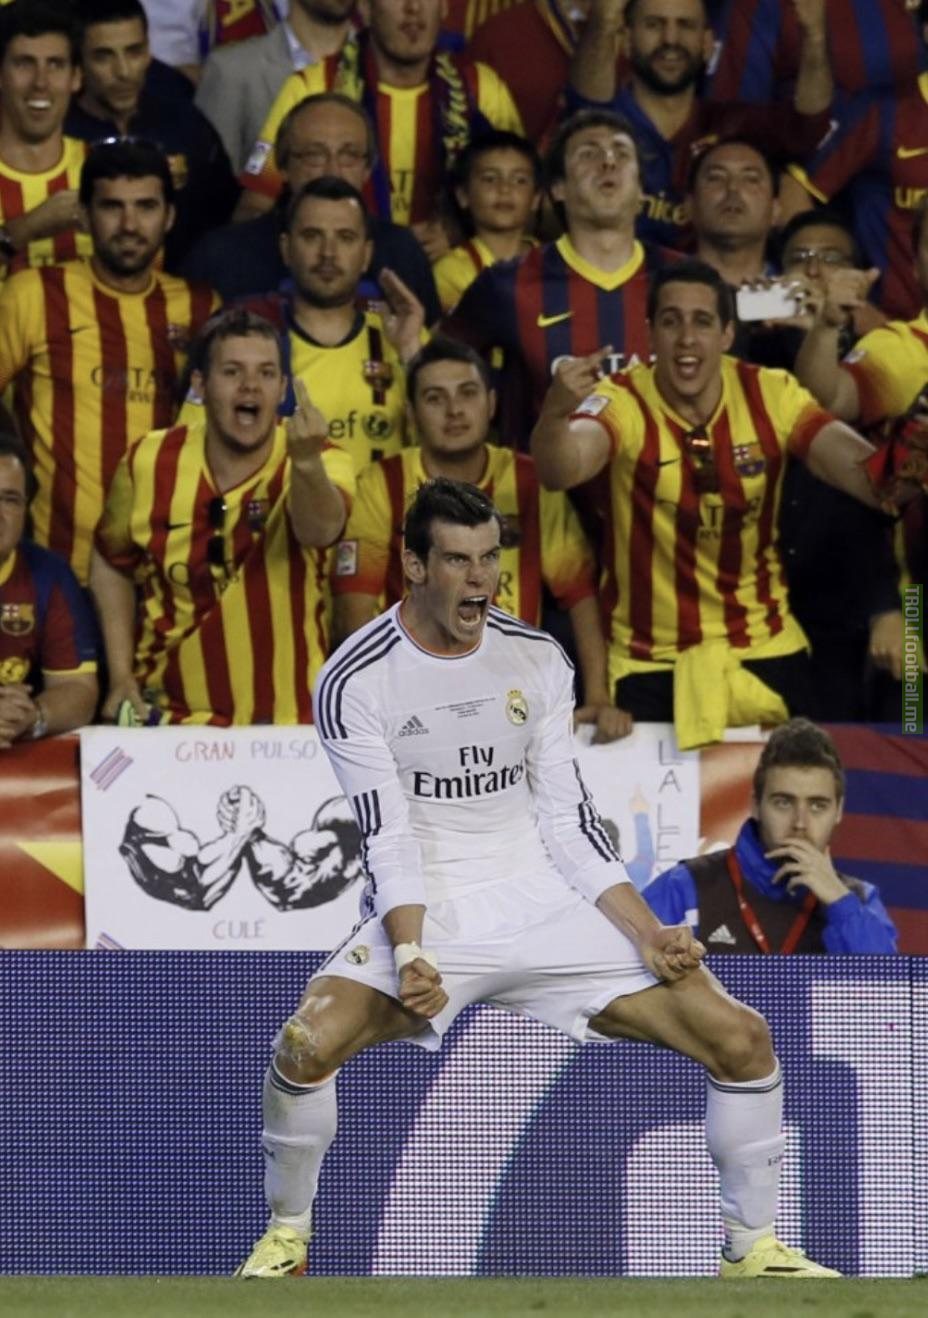 My favorite Bale picture, enjoy retirement legend